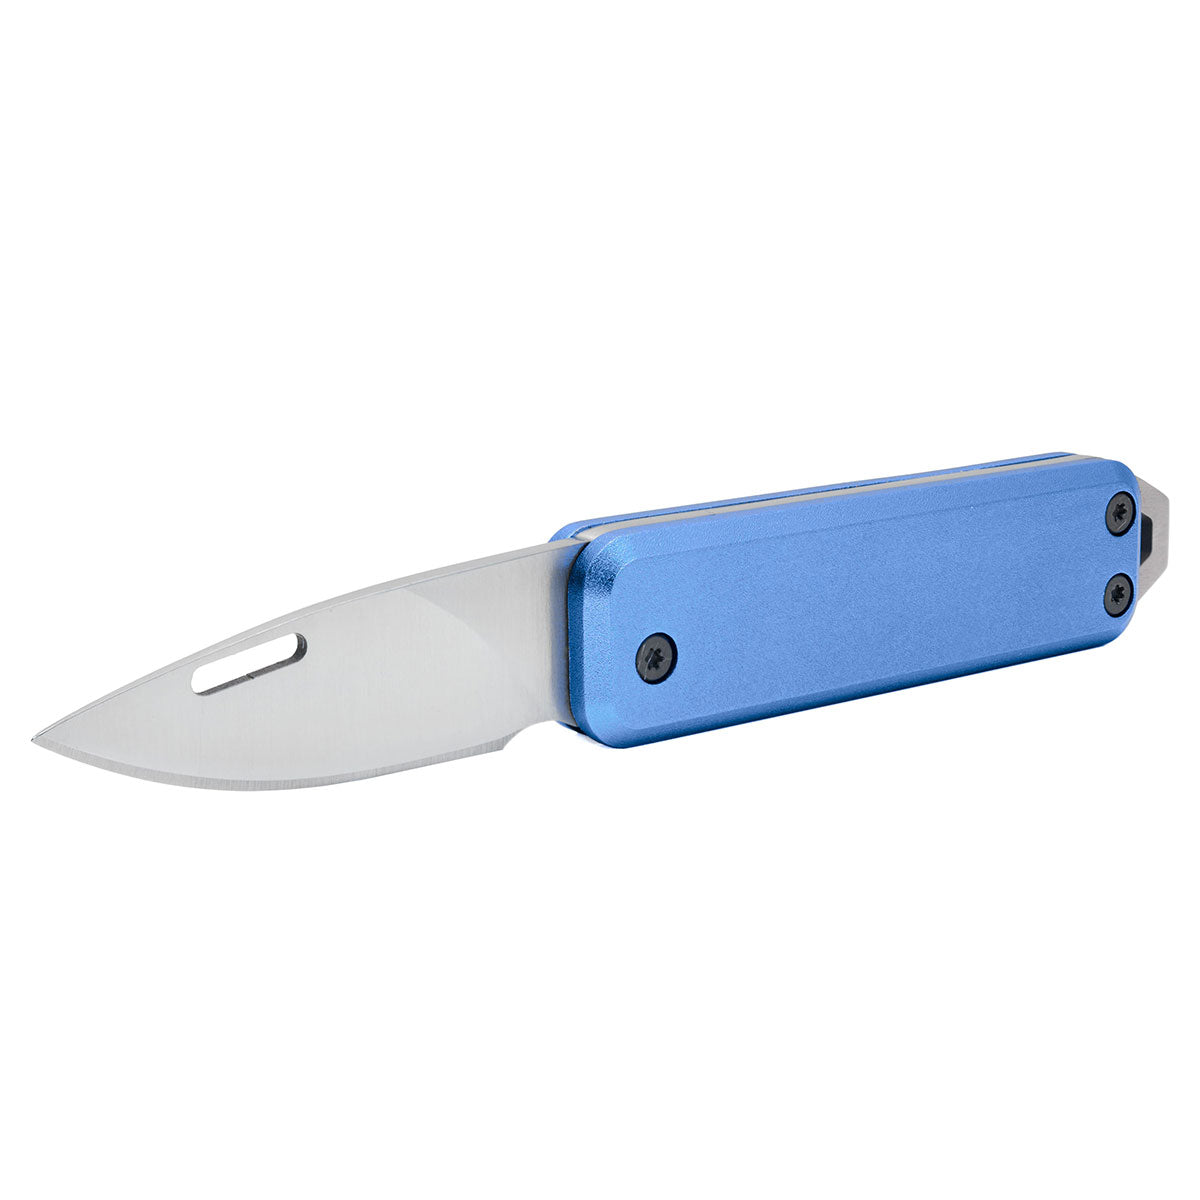 Atka | Sprint EDC Knife